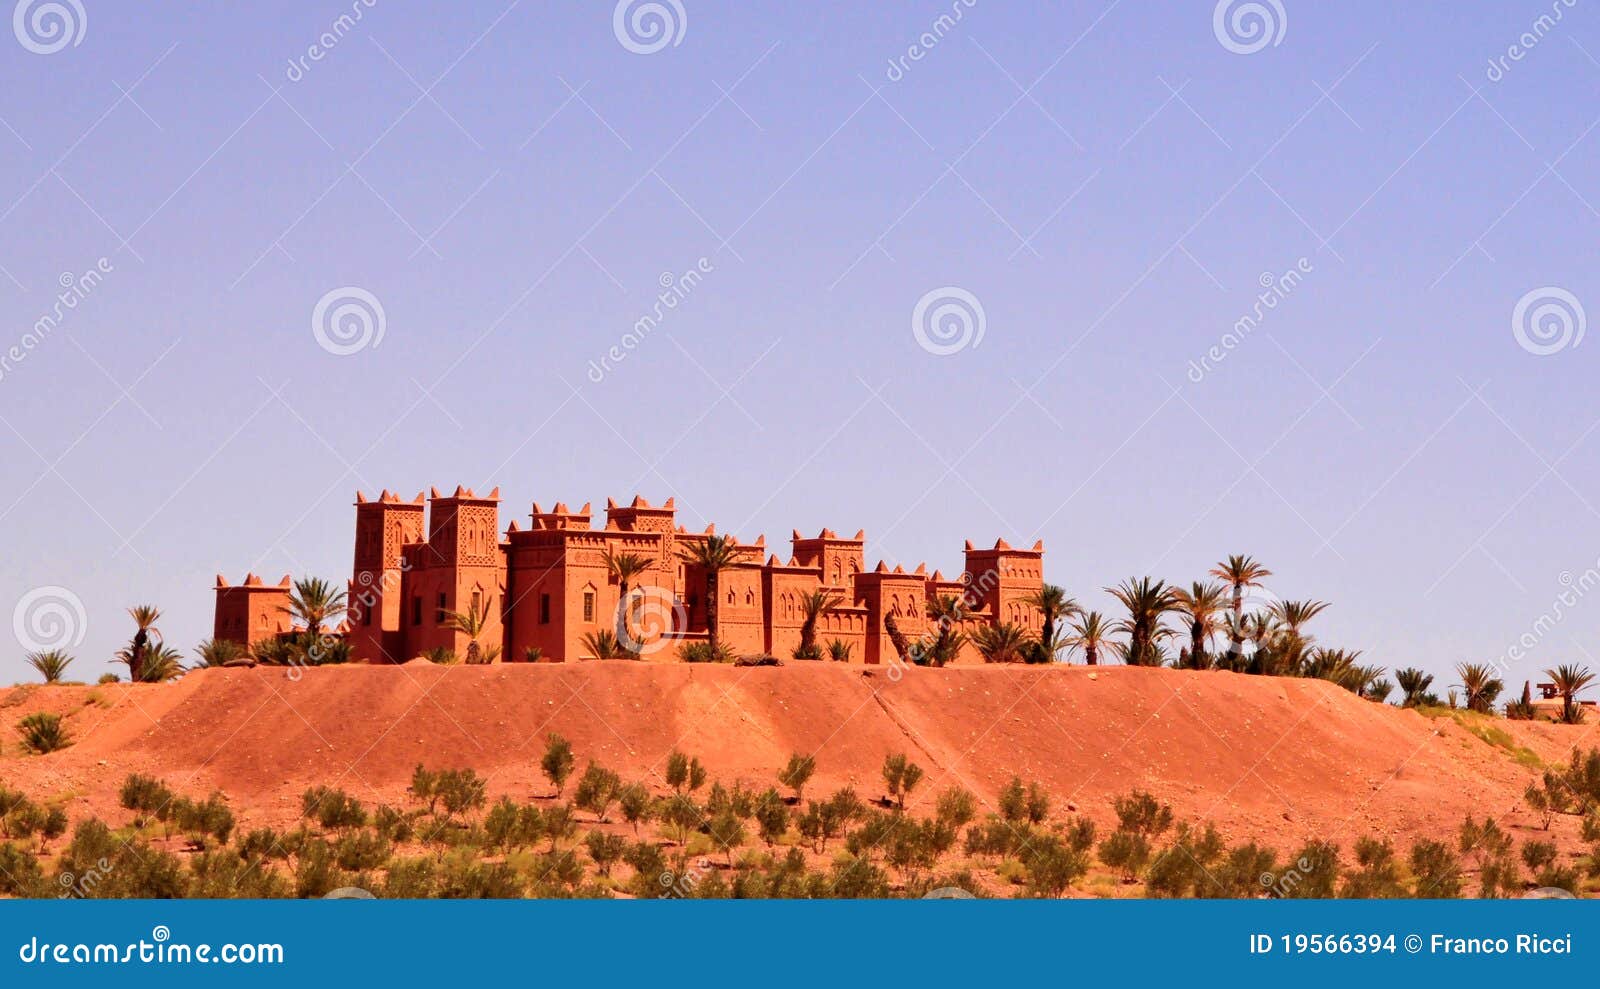 kasbah - castle in morocco